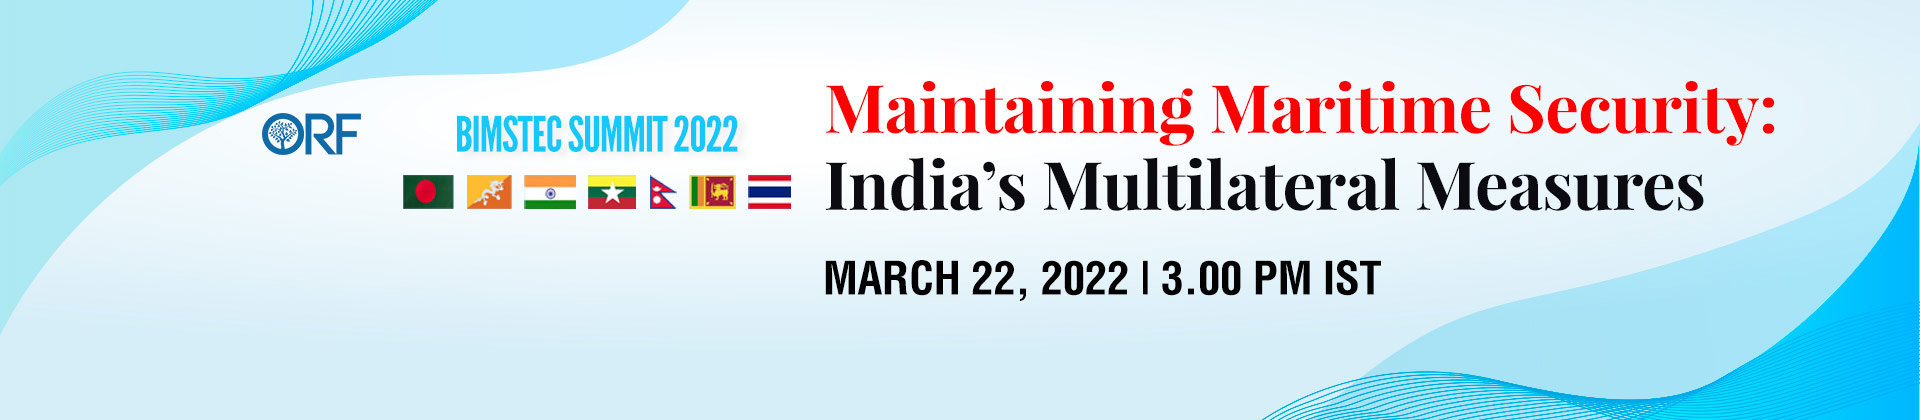 BIMSTEC Summit 2022 | Maintaining Maritime Security: India’s Multilateral Measures